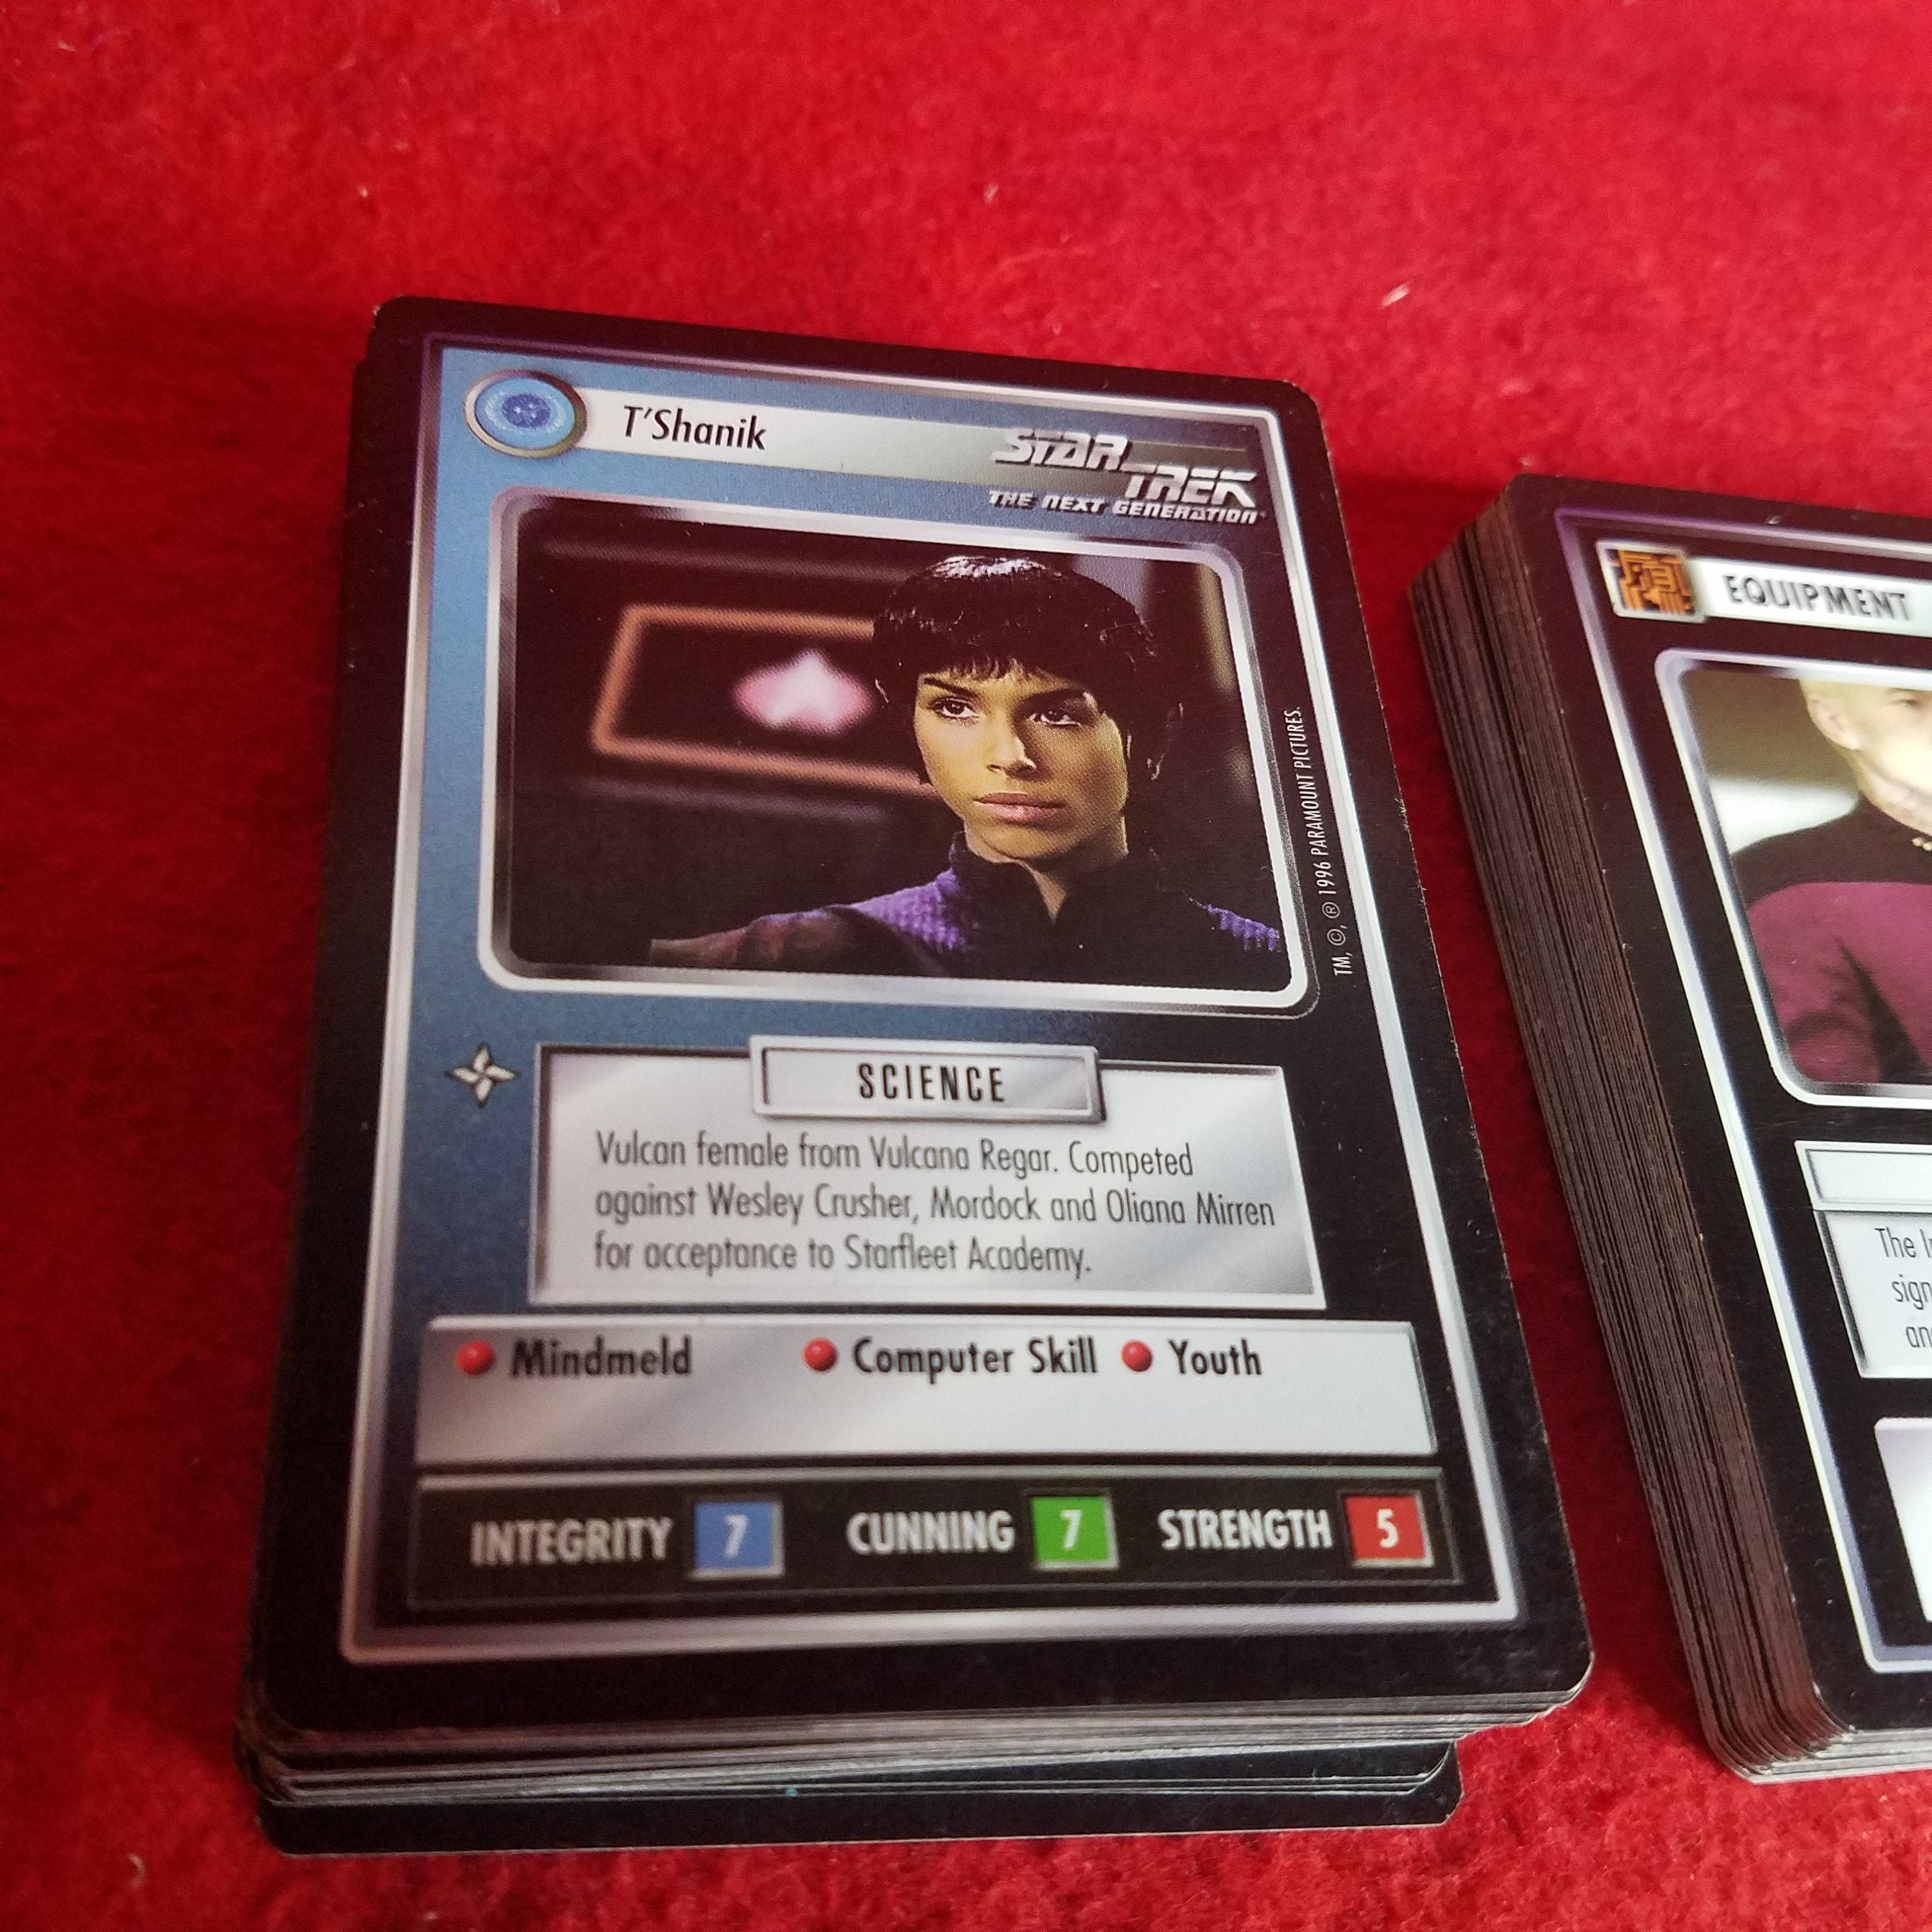 1996 Star Trek Next Generation Customizable Card Game Immortal